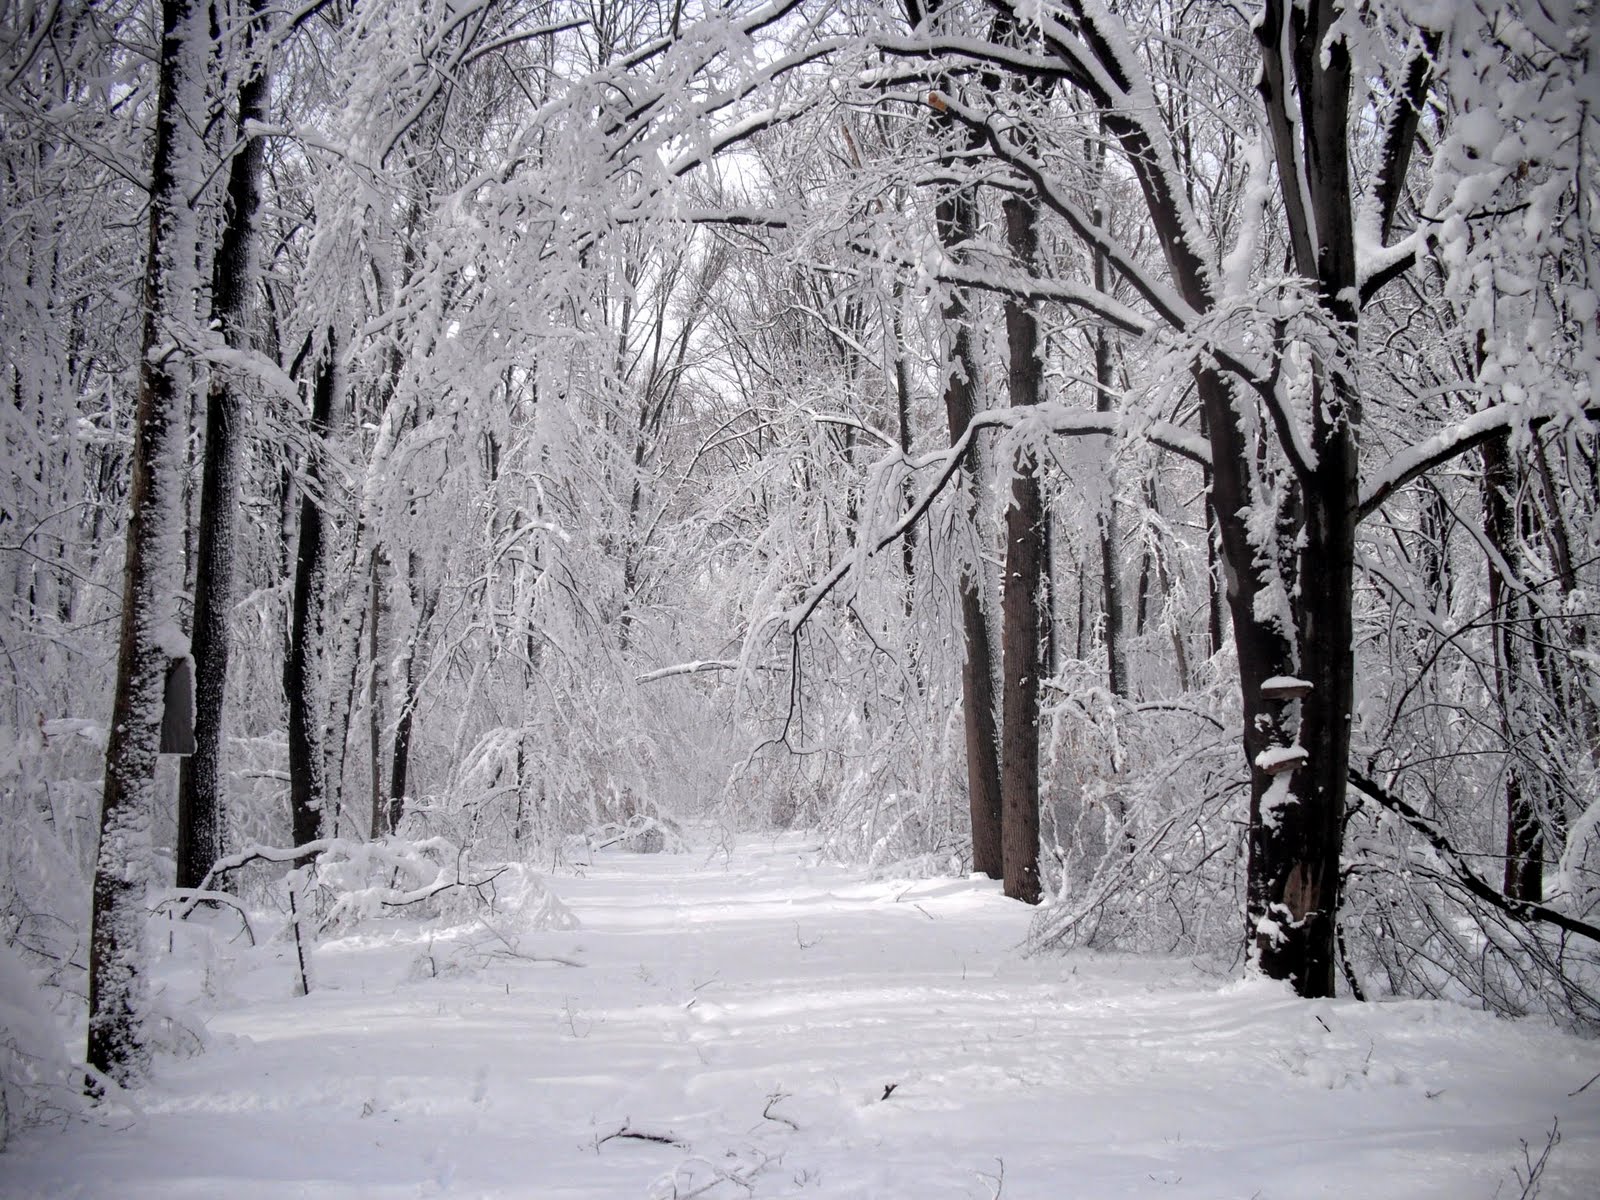 bensozia: The Forest in Winter